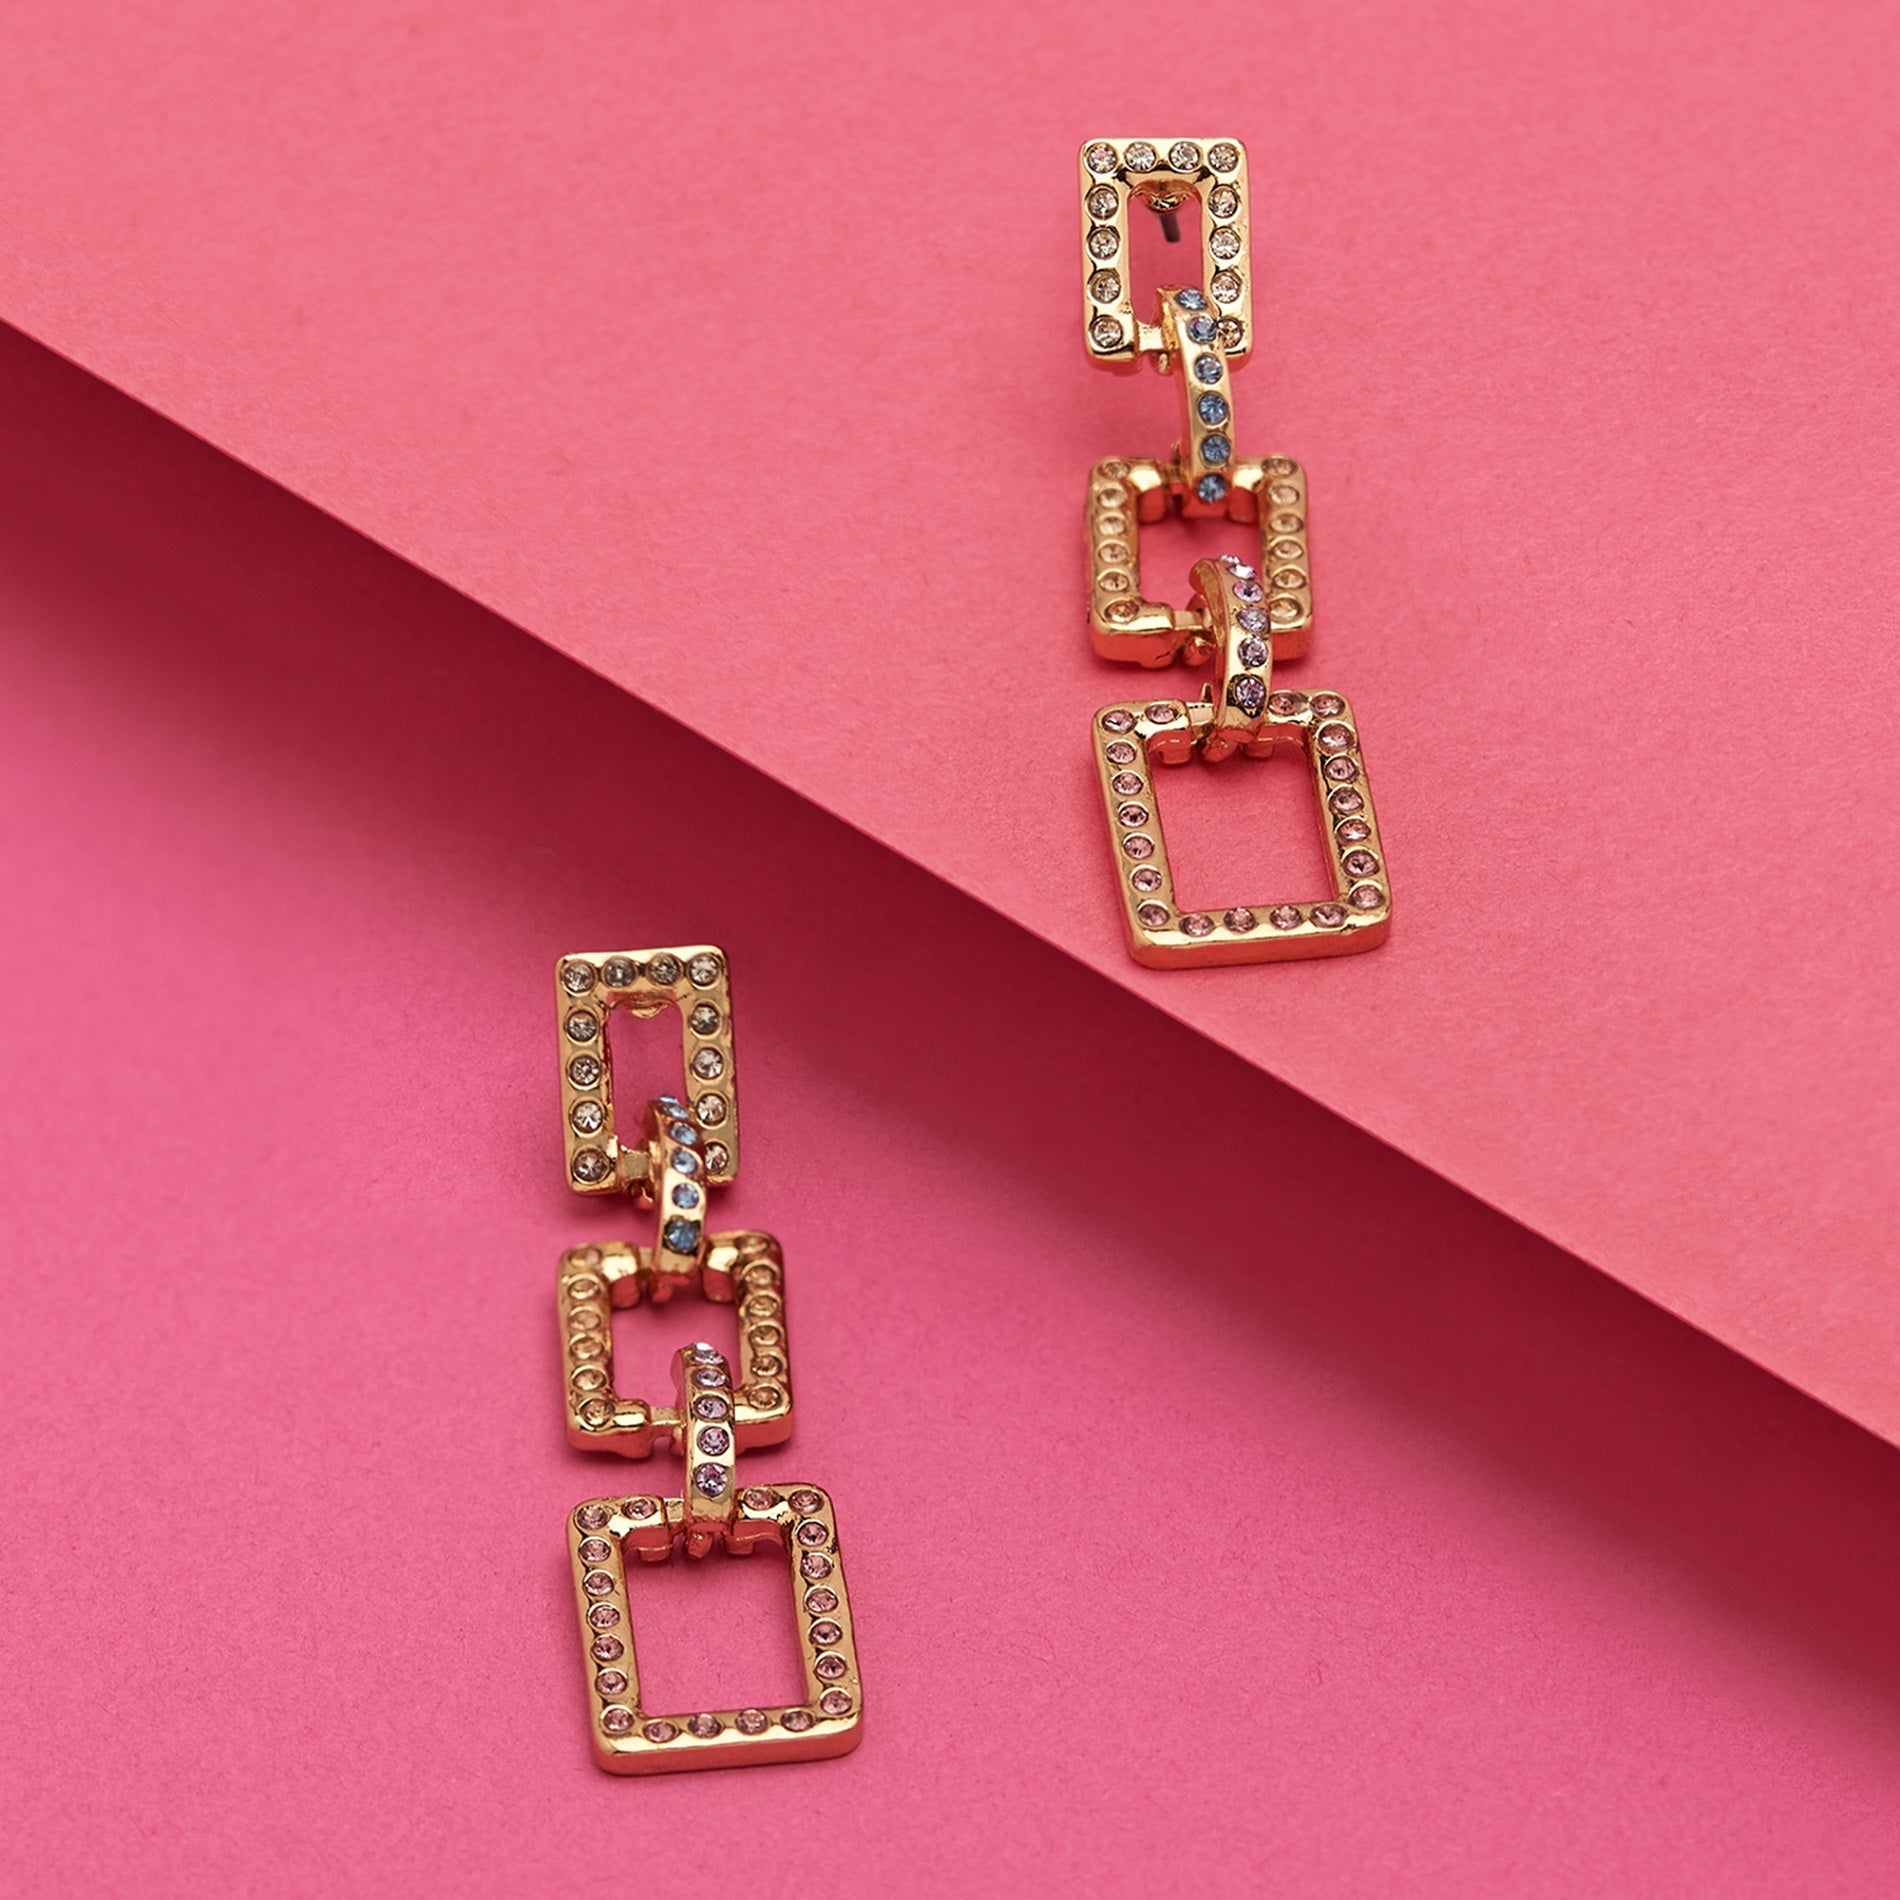 Accessorize London Women'S Gold Pastel Pop Pave Linked Square Drop Earring